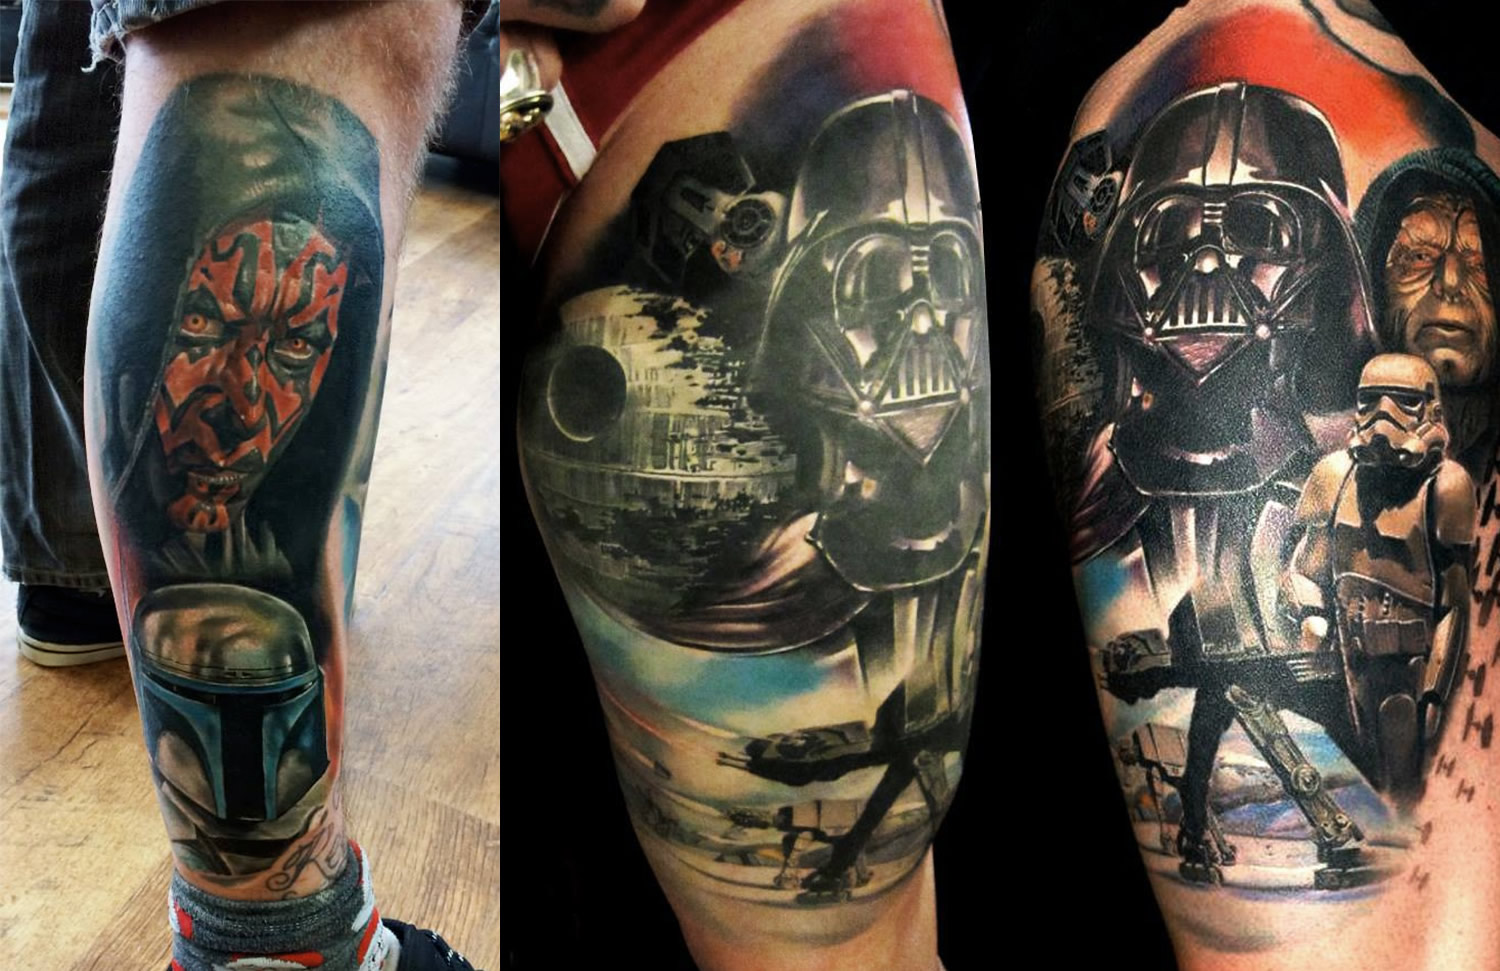 darth maul and Jango Fett tattooed on leg by Jordan Croke, right: star wars scene tattoo by Matteo Pasqualin